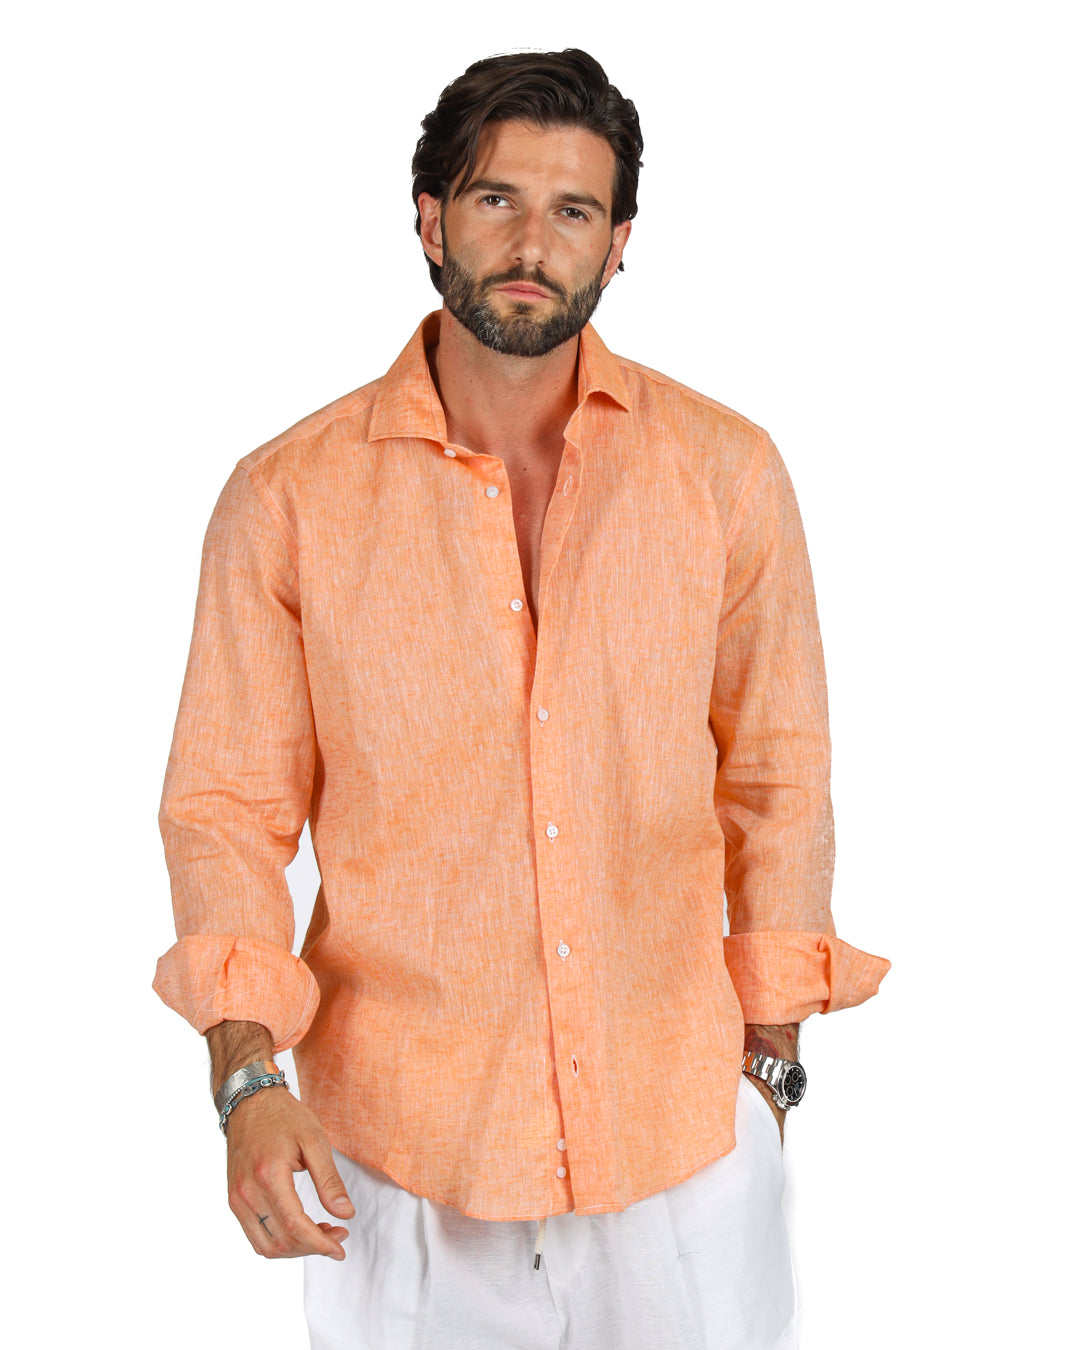 Praiano - Classic orange linen shirt